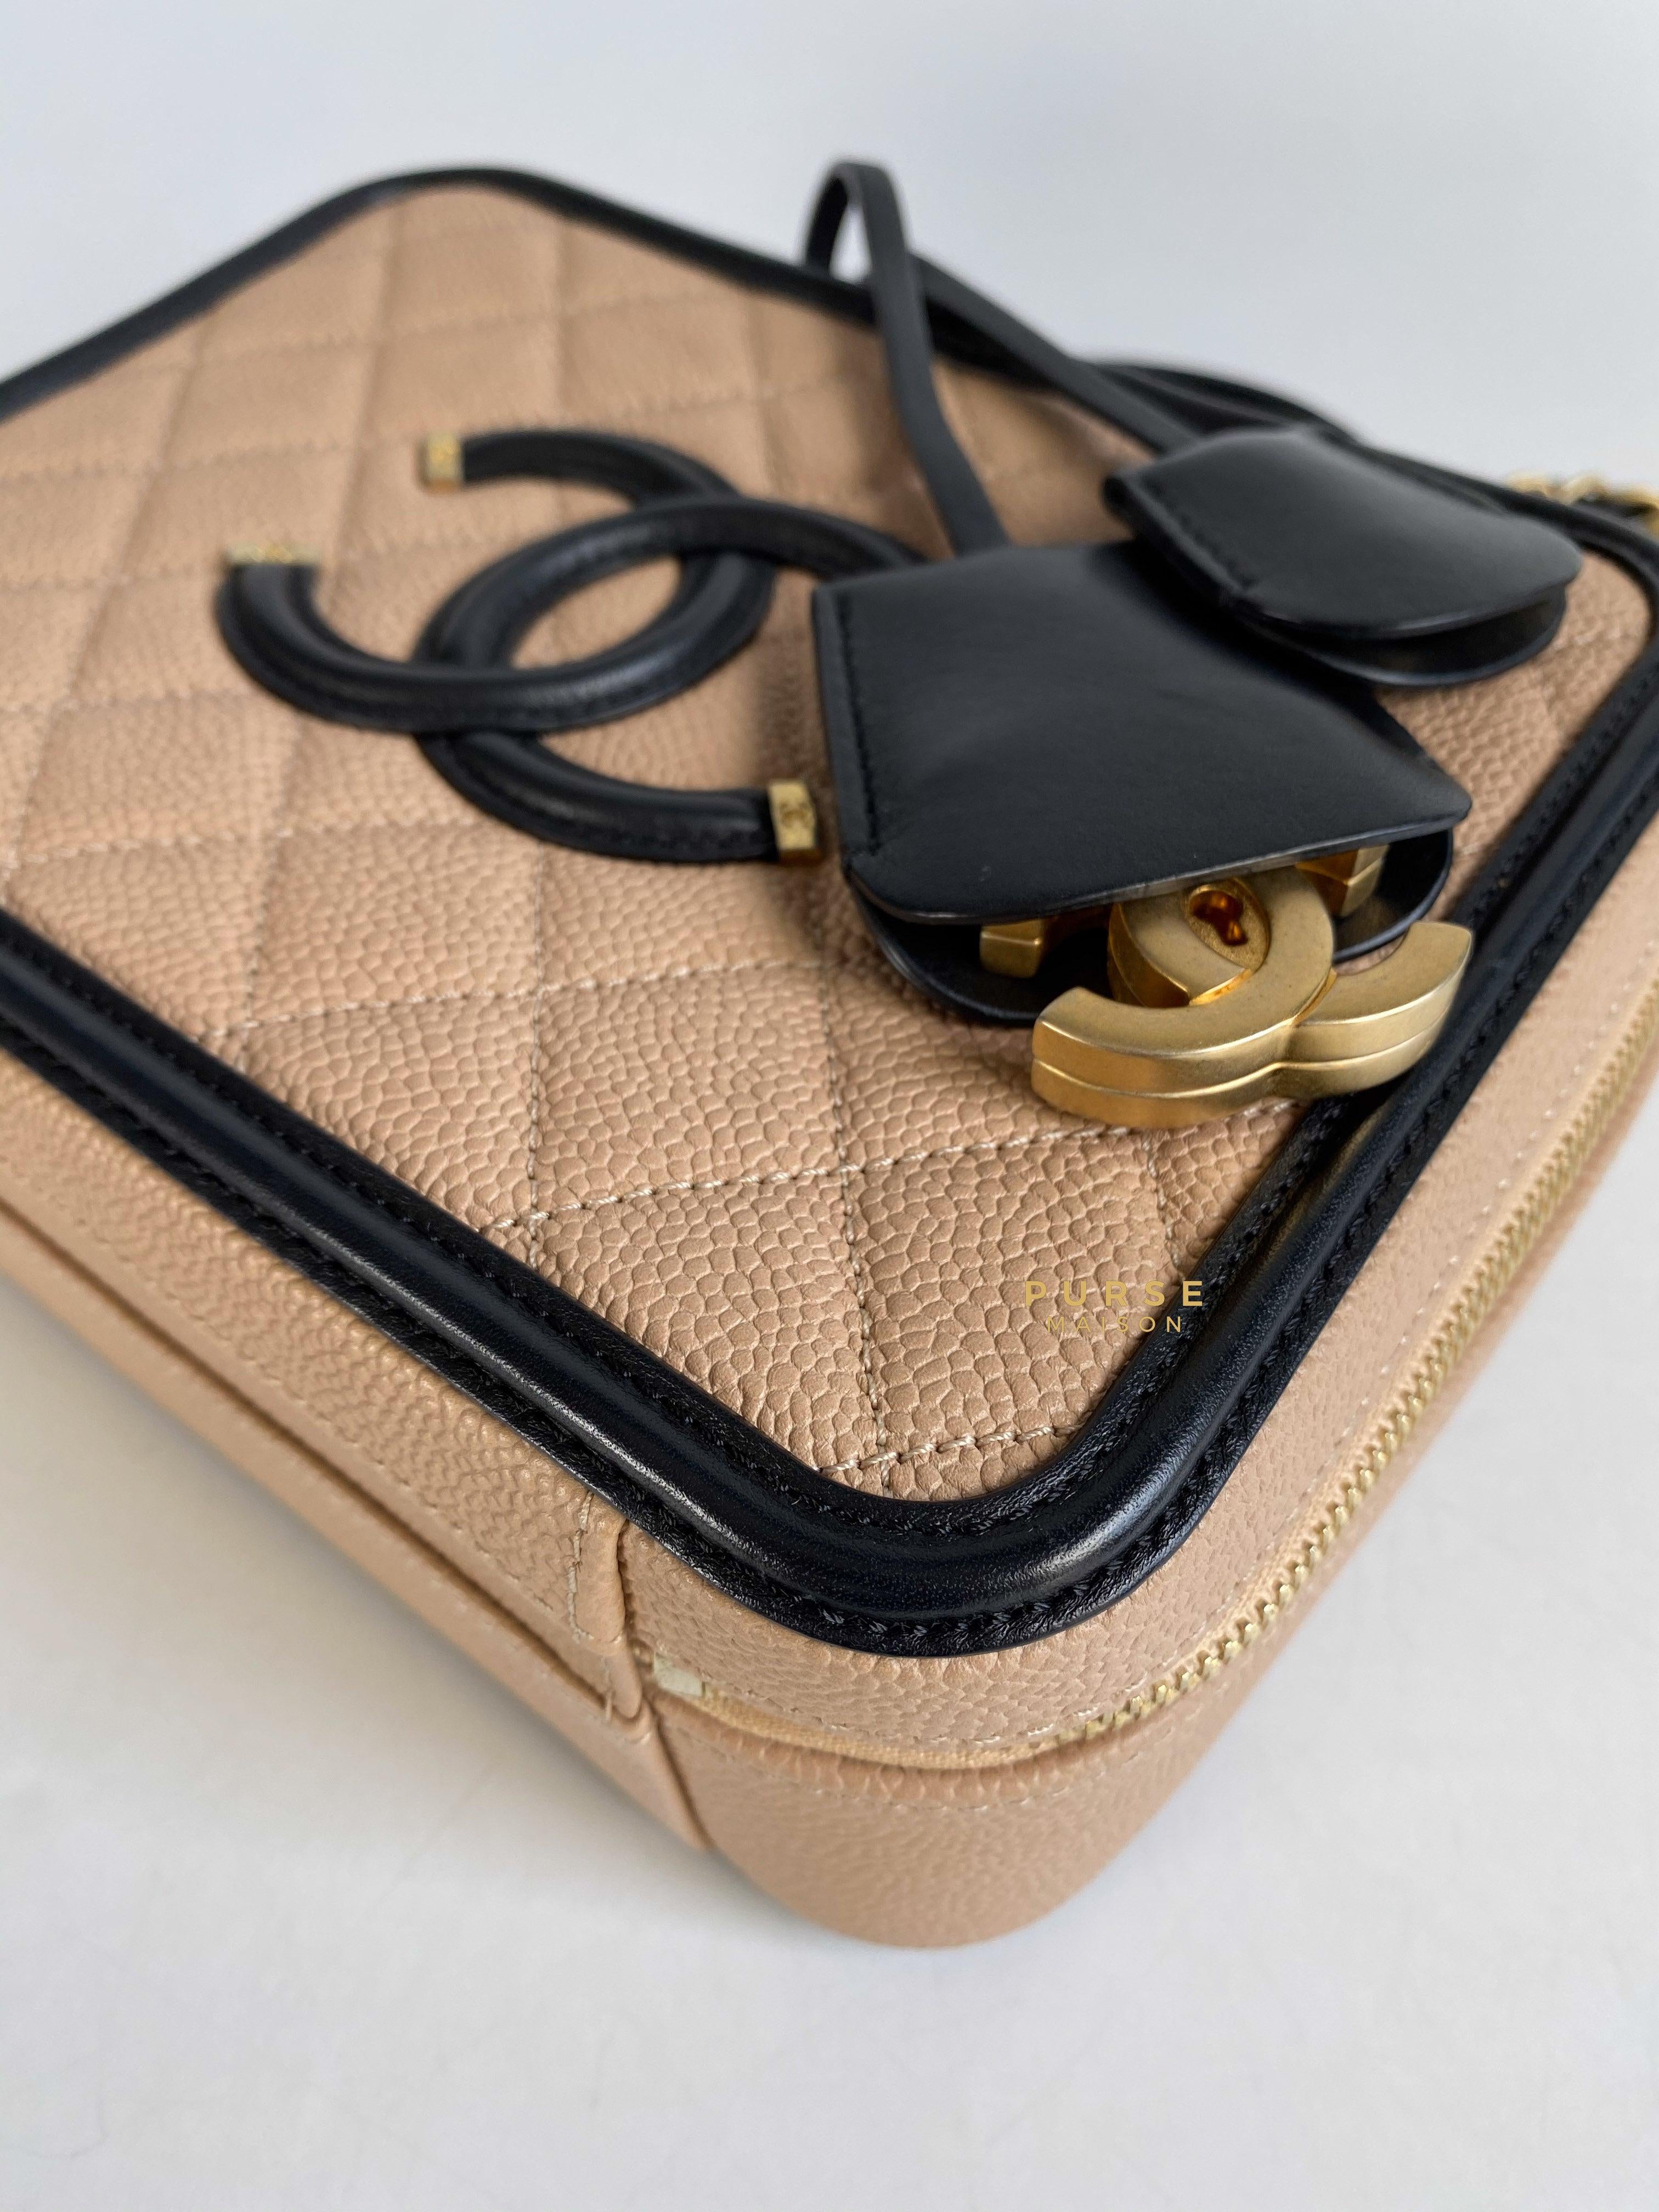 Chanel CC Filigree Medium Vanity Bag Beige/Black Caviar Leather in Aged Gold Hardware Series 24 | Purse Maison Luxury Bags Shop